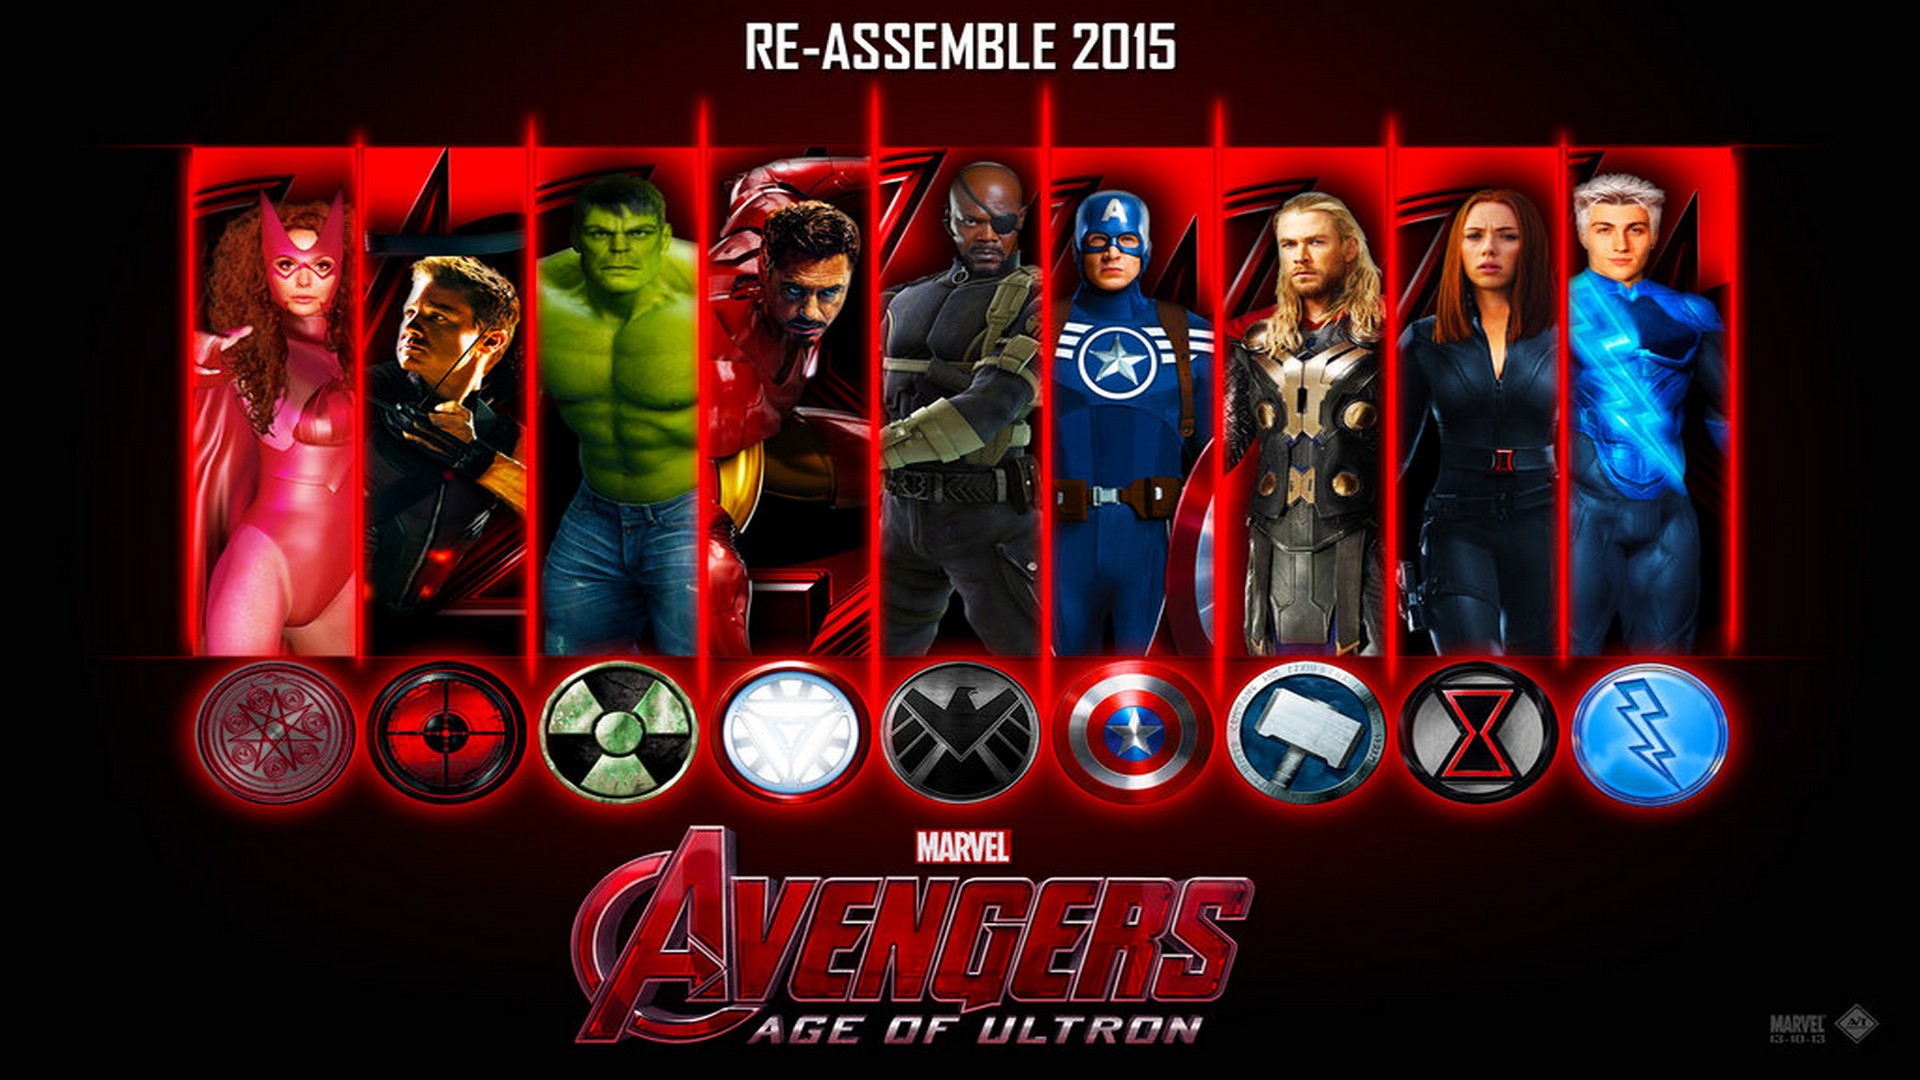 Avengers Age of Ultron 2015 Wallpaper Desktop   4   HD Wallpapers 1920x1080